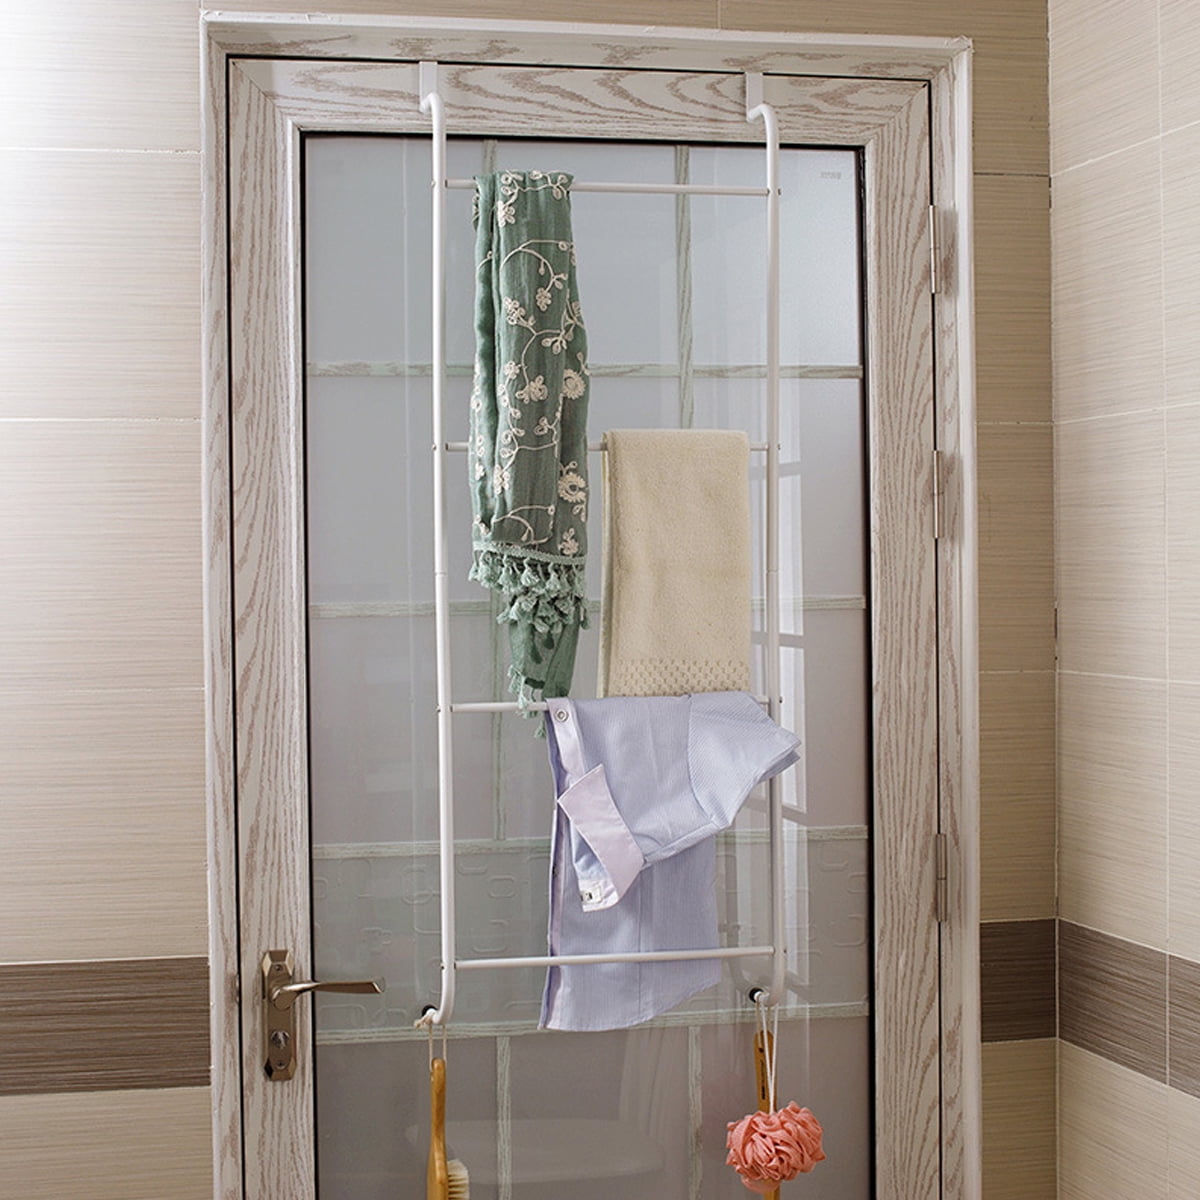 Modern Metal Over The Shower Door Towel Rack Holder Organizer, for Bathroom Towels, Clothes